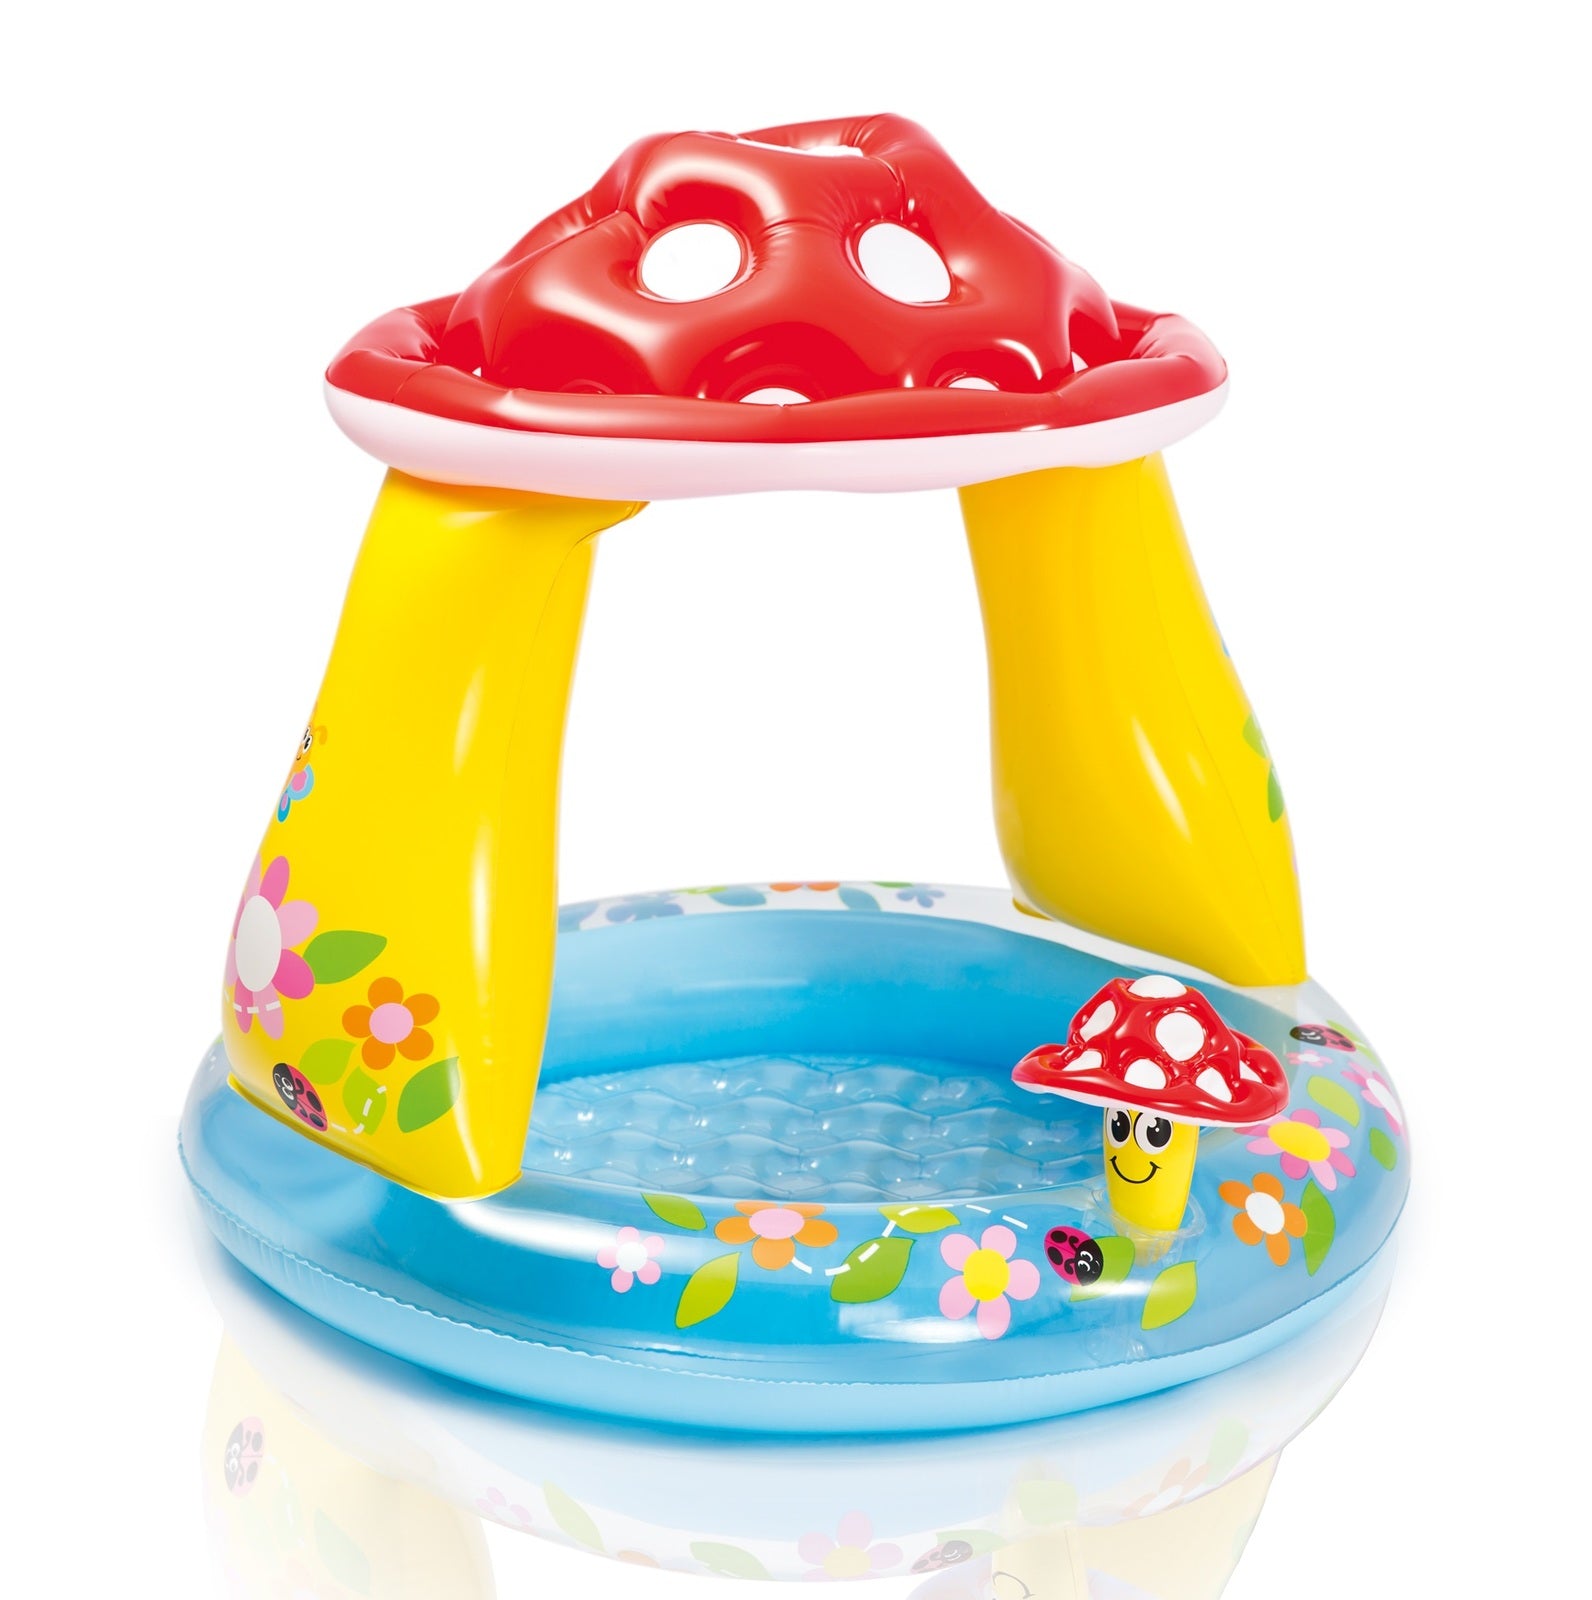 Intex: Mushroom Baby Pool